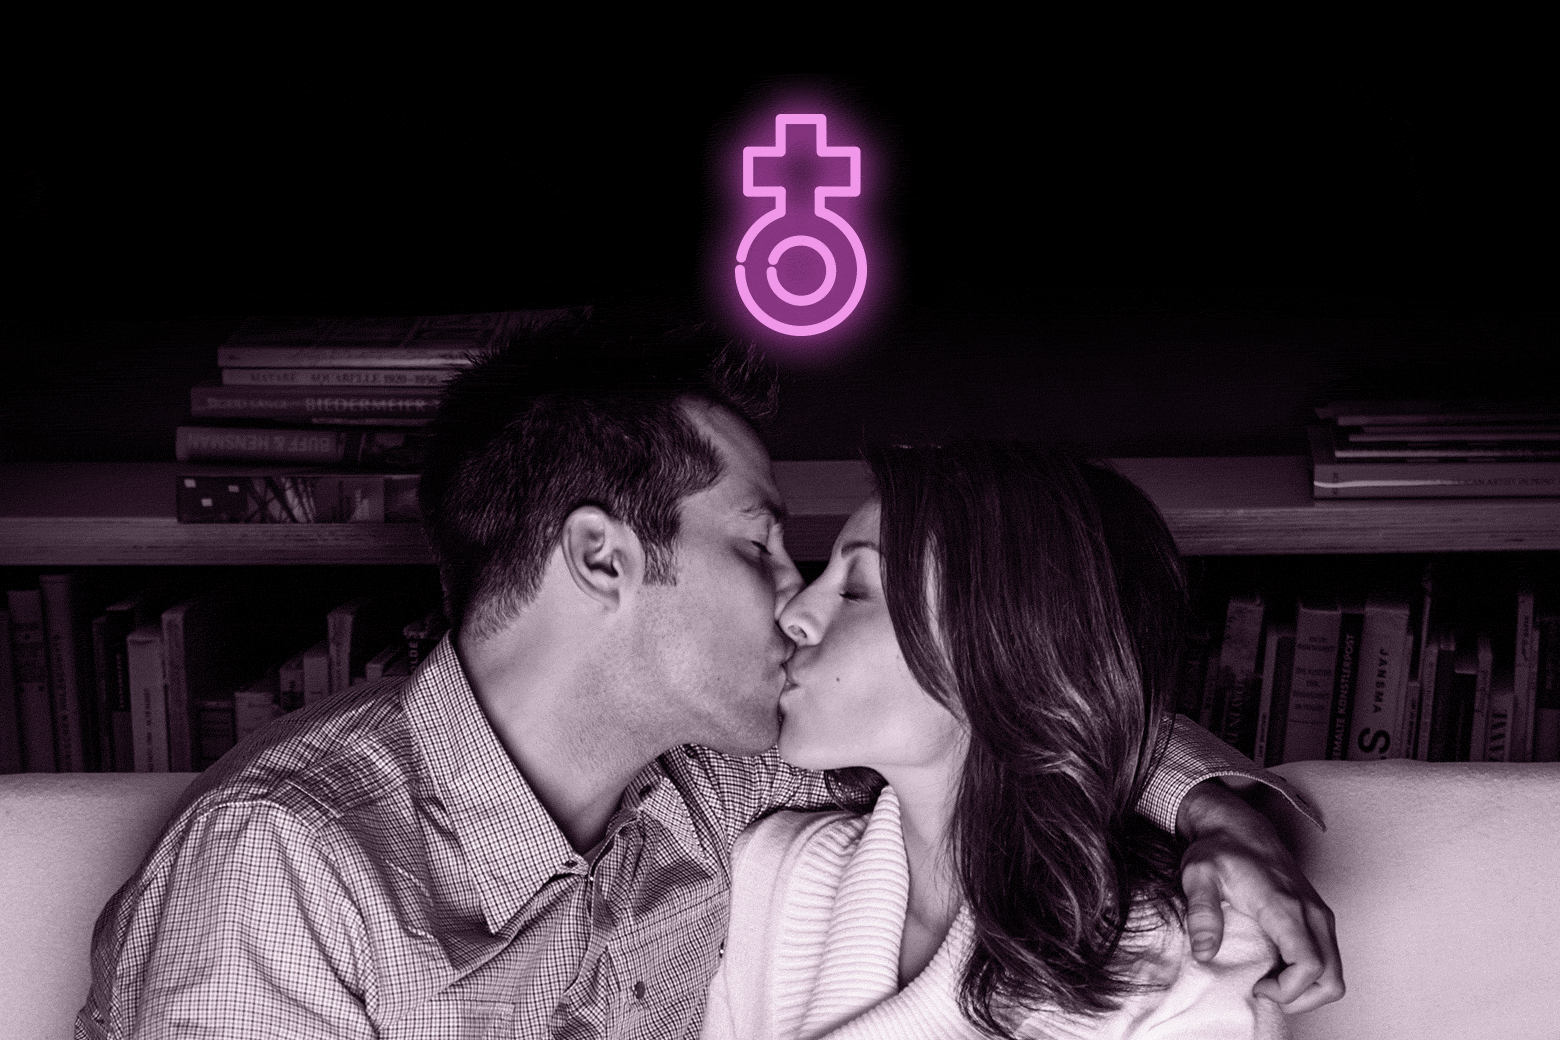 A couple kissing under a "woman" symbol.